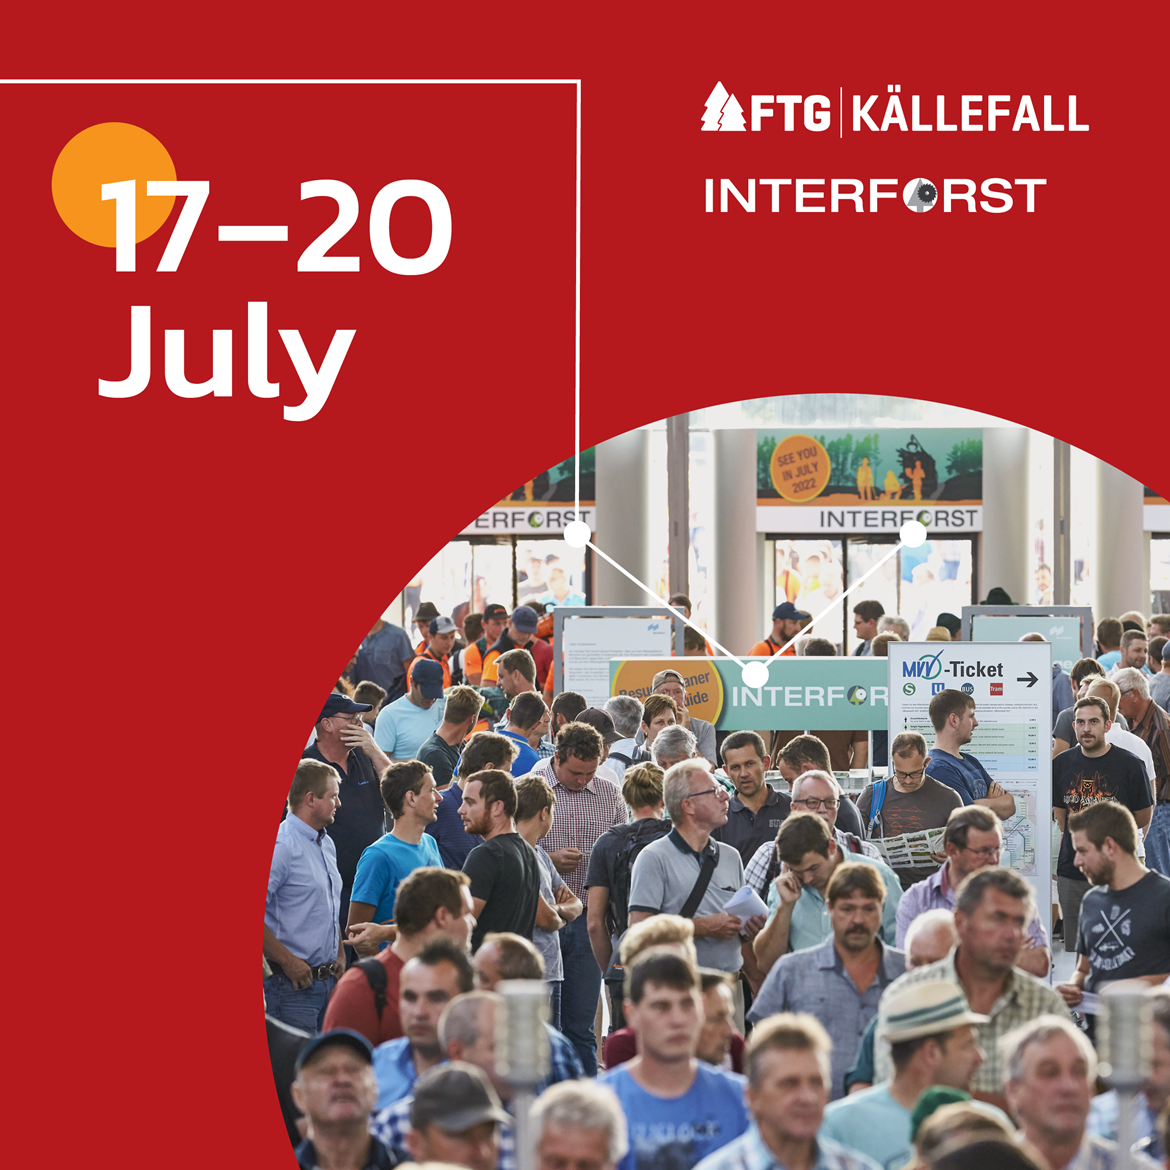 FTG Kallefall Arneuba Interforest 2022 Exhibition.png